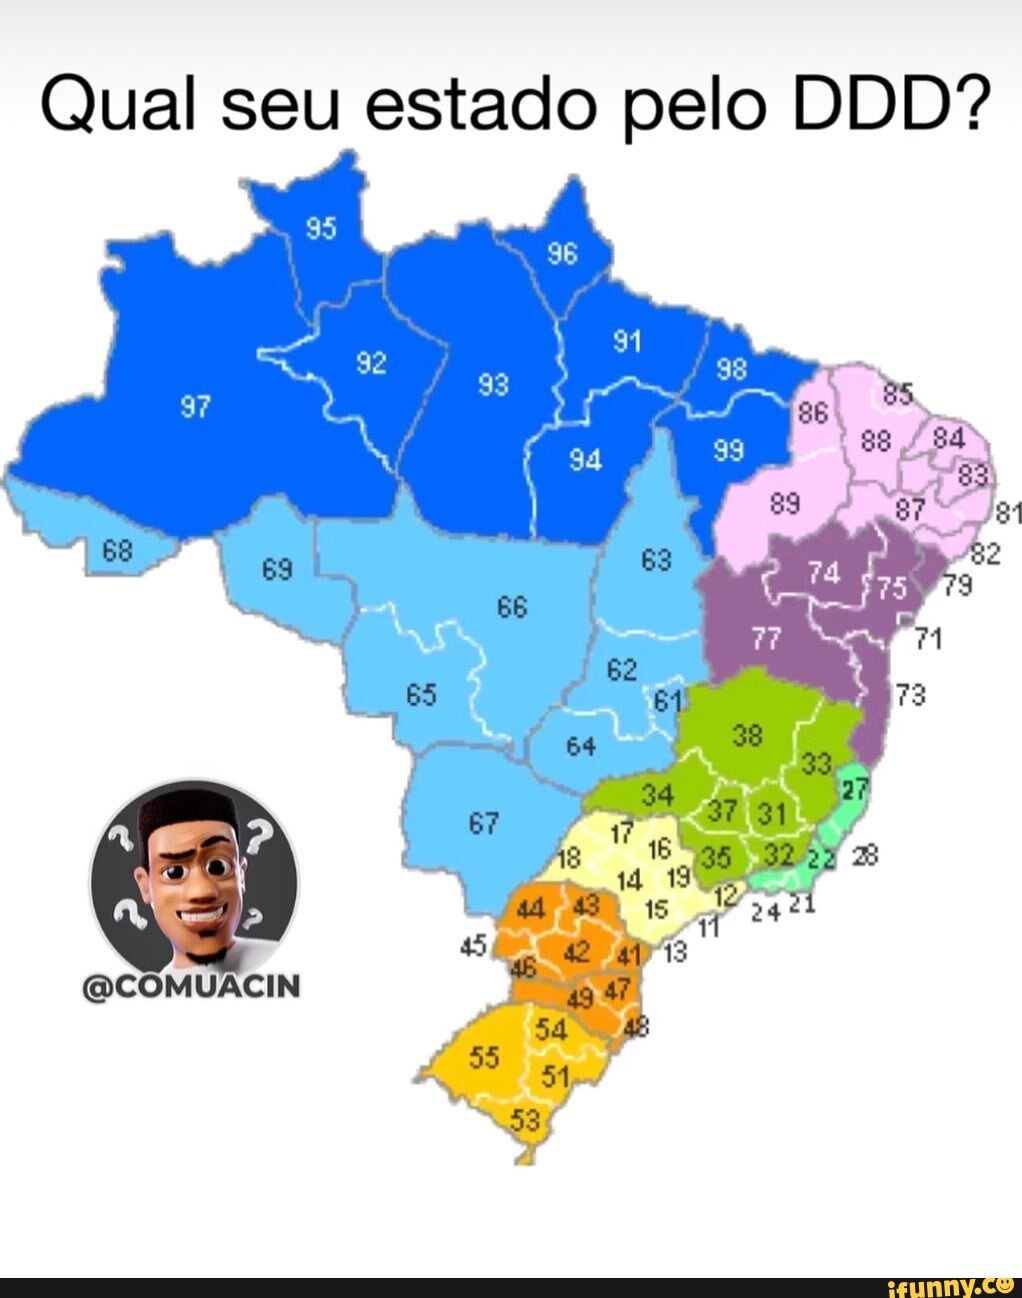 N/A - Qual seu estado pelo DDD? 98 as - iFunny Brazil